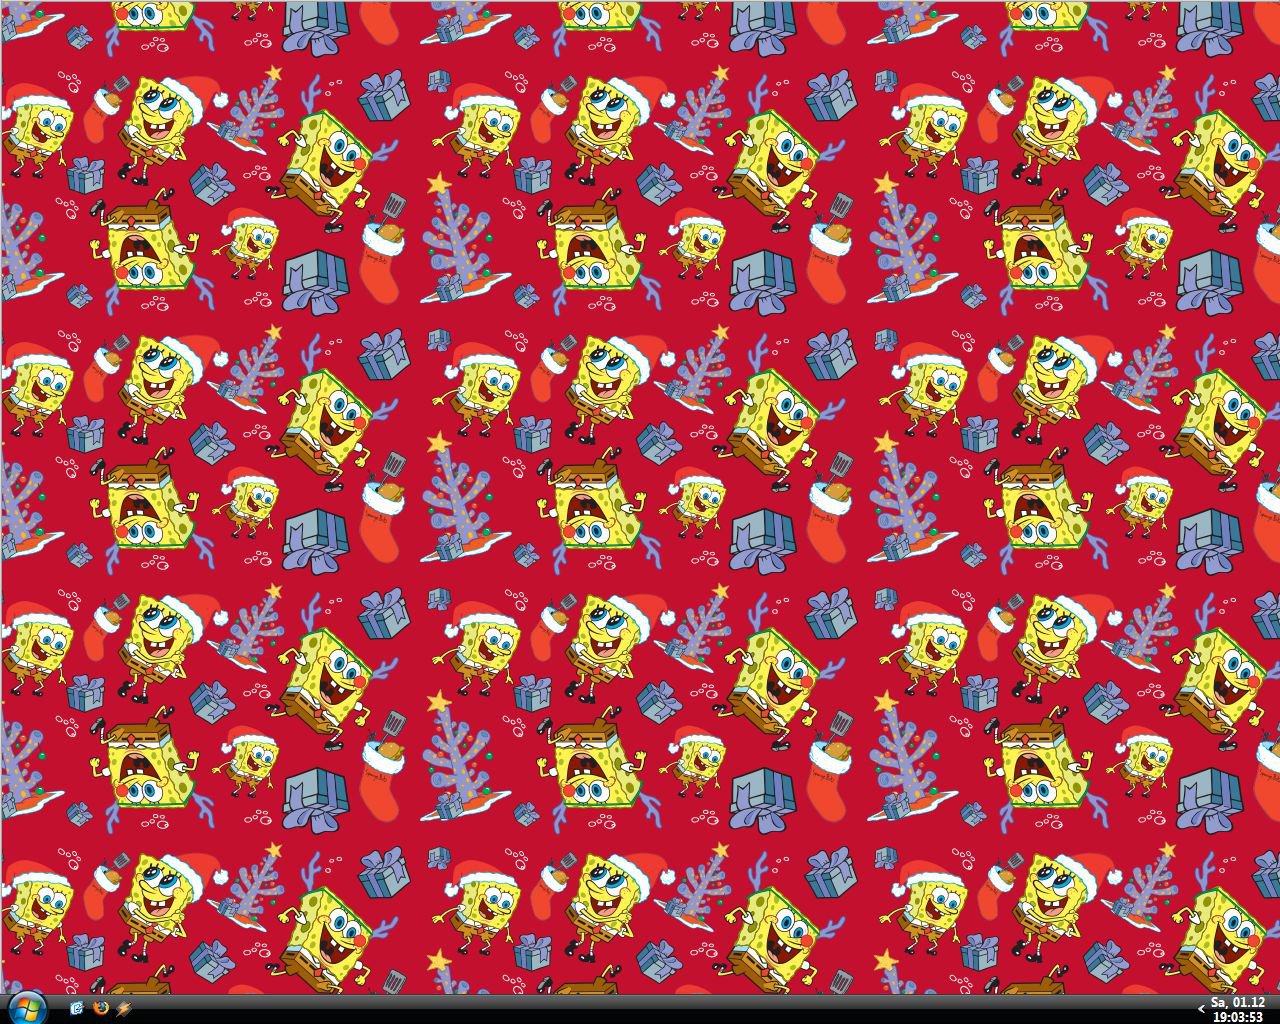 Spongebob Wallpaper 2007 by bakn90 on DeviantArt